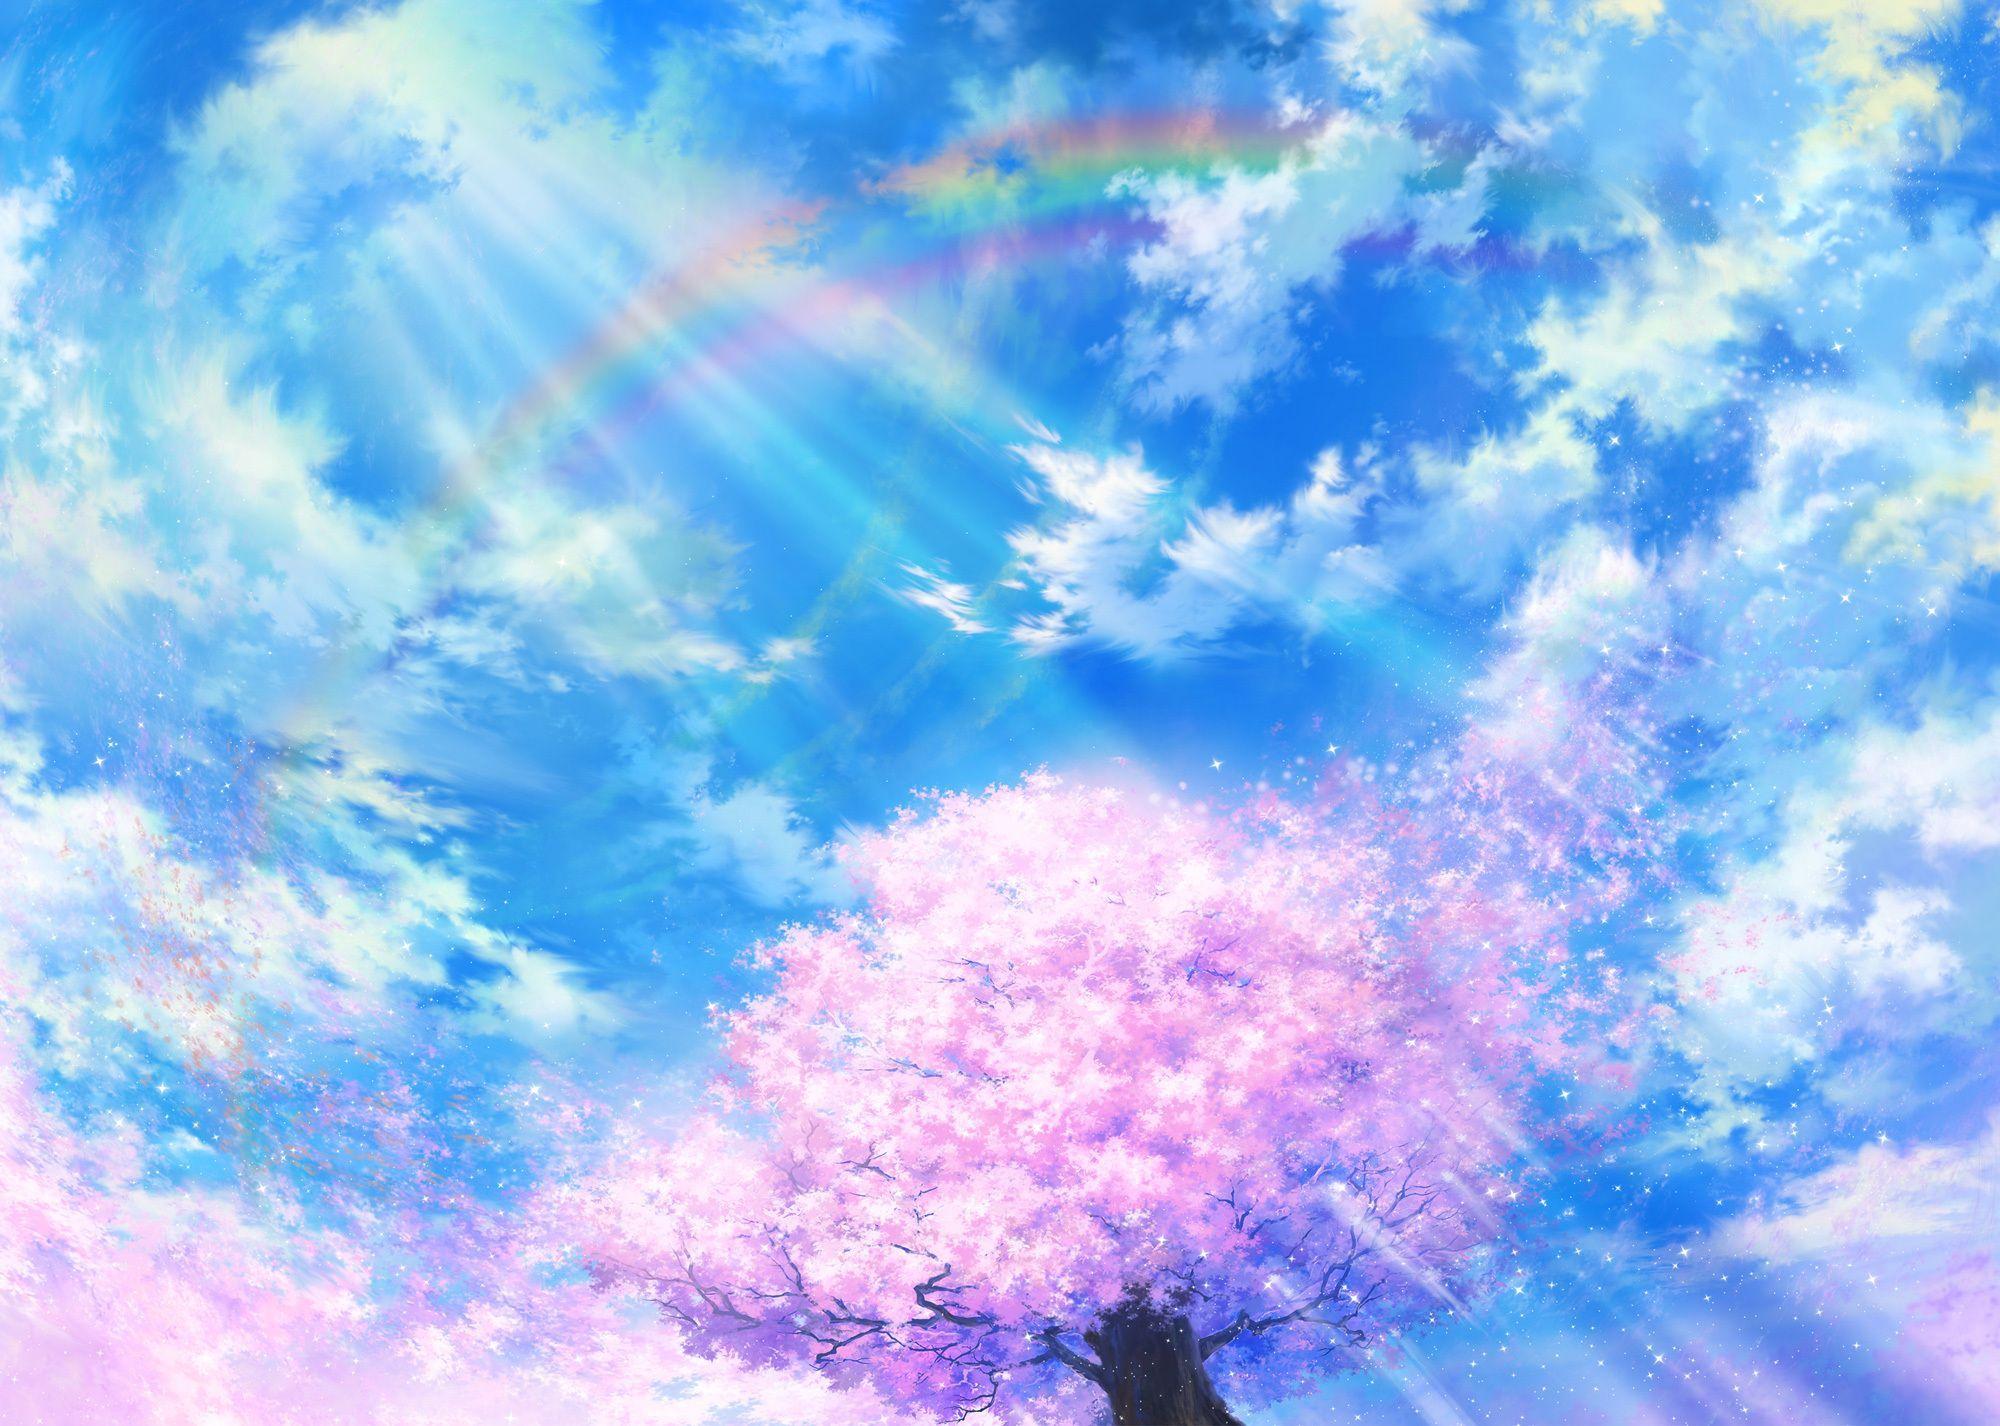 Sky Cloud Anime Photo Wallpaper Widescreen 2000x1426 px